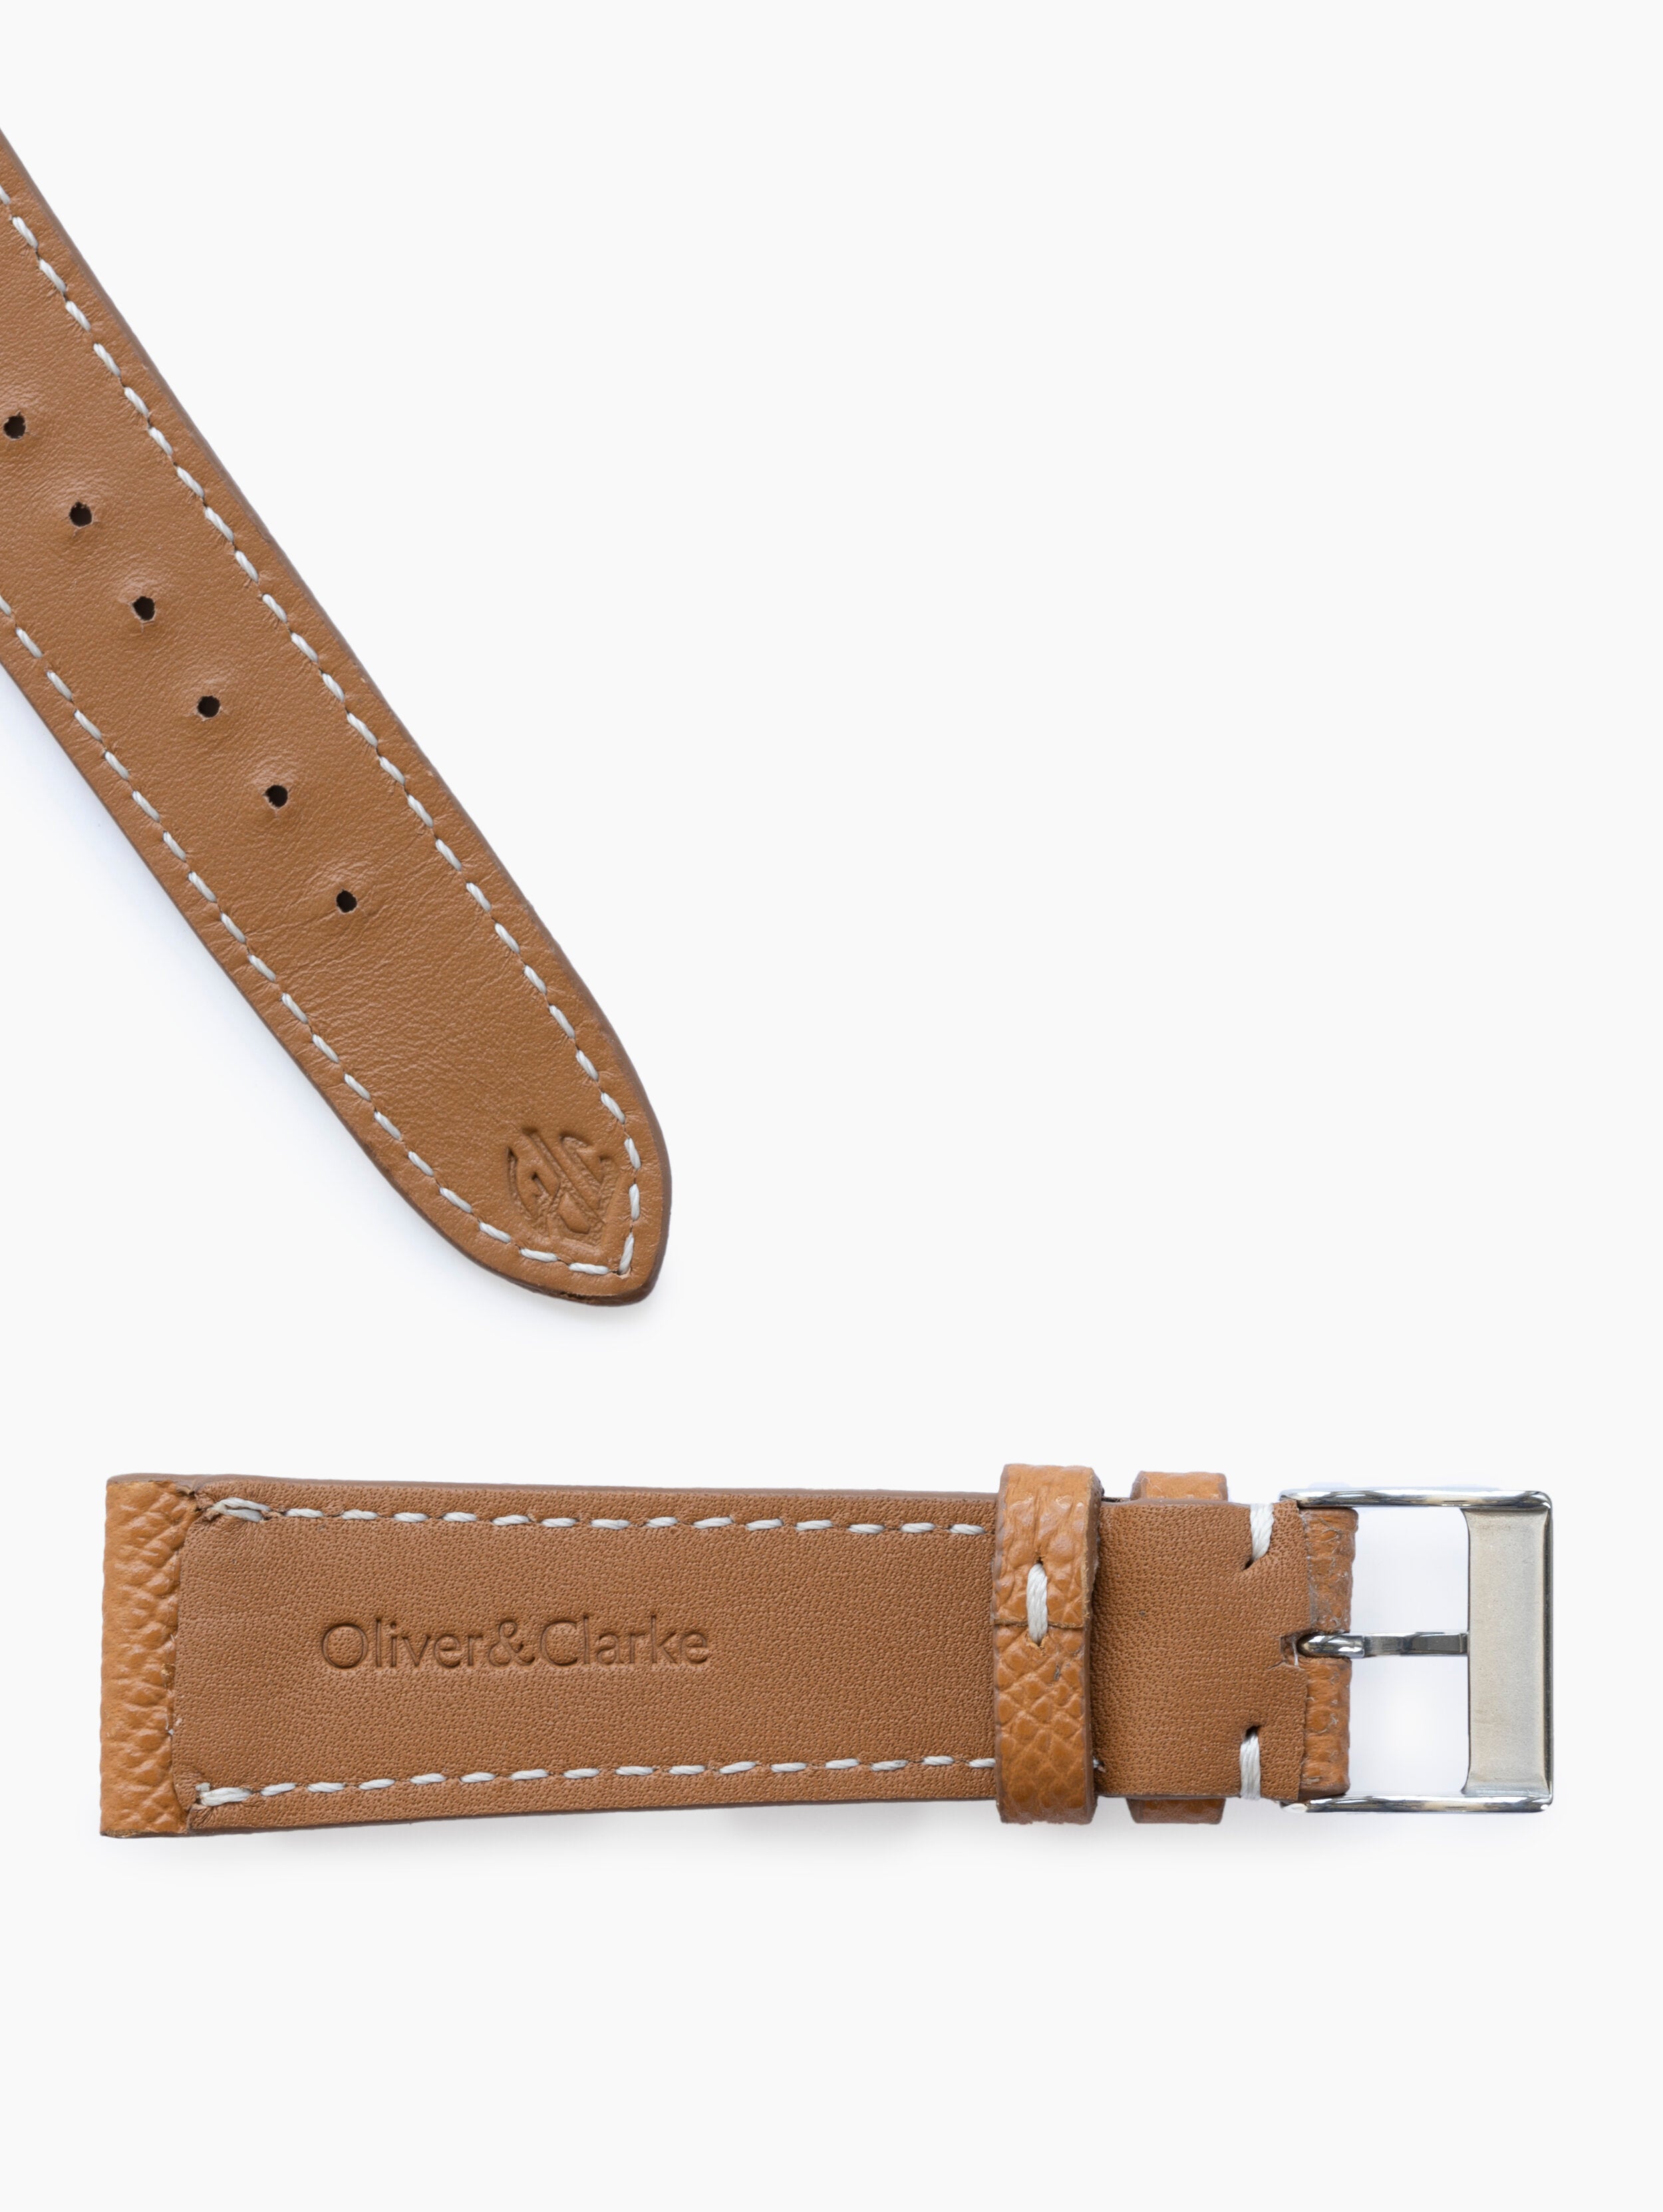 Cervo Brown JPM x Oliver & Clarke Leather Watch Strap